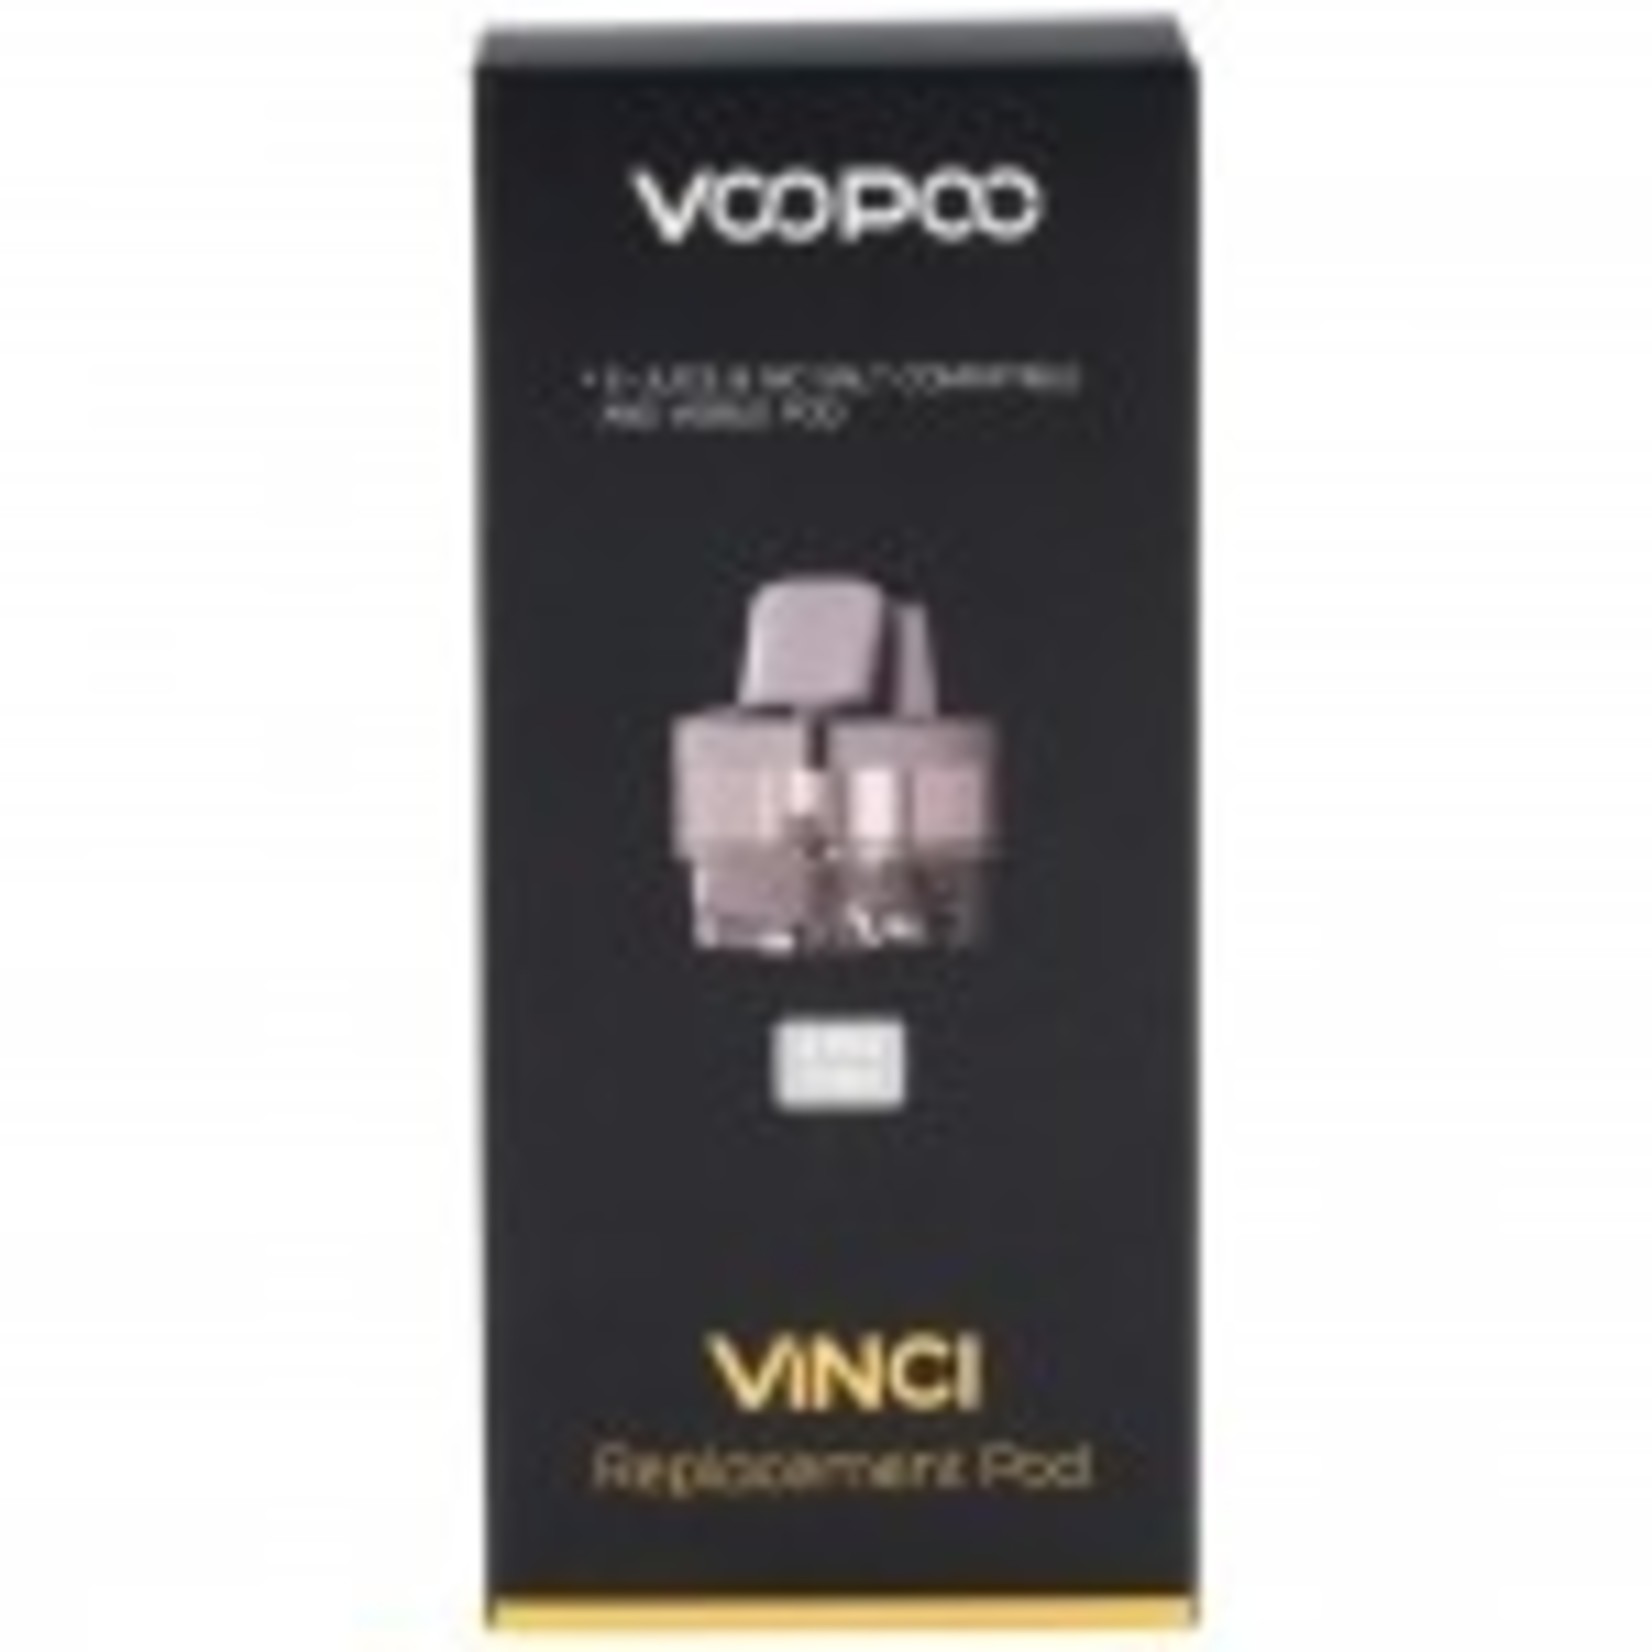 VooPoo Tech Vinci Replacement Pods